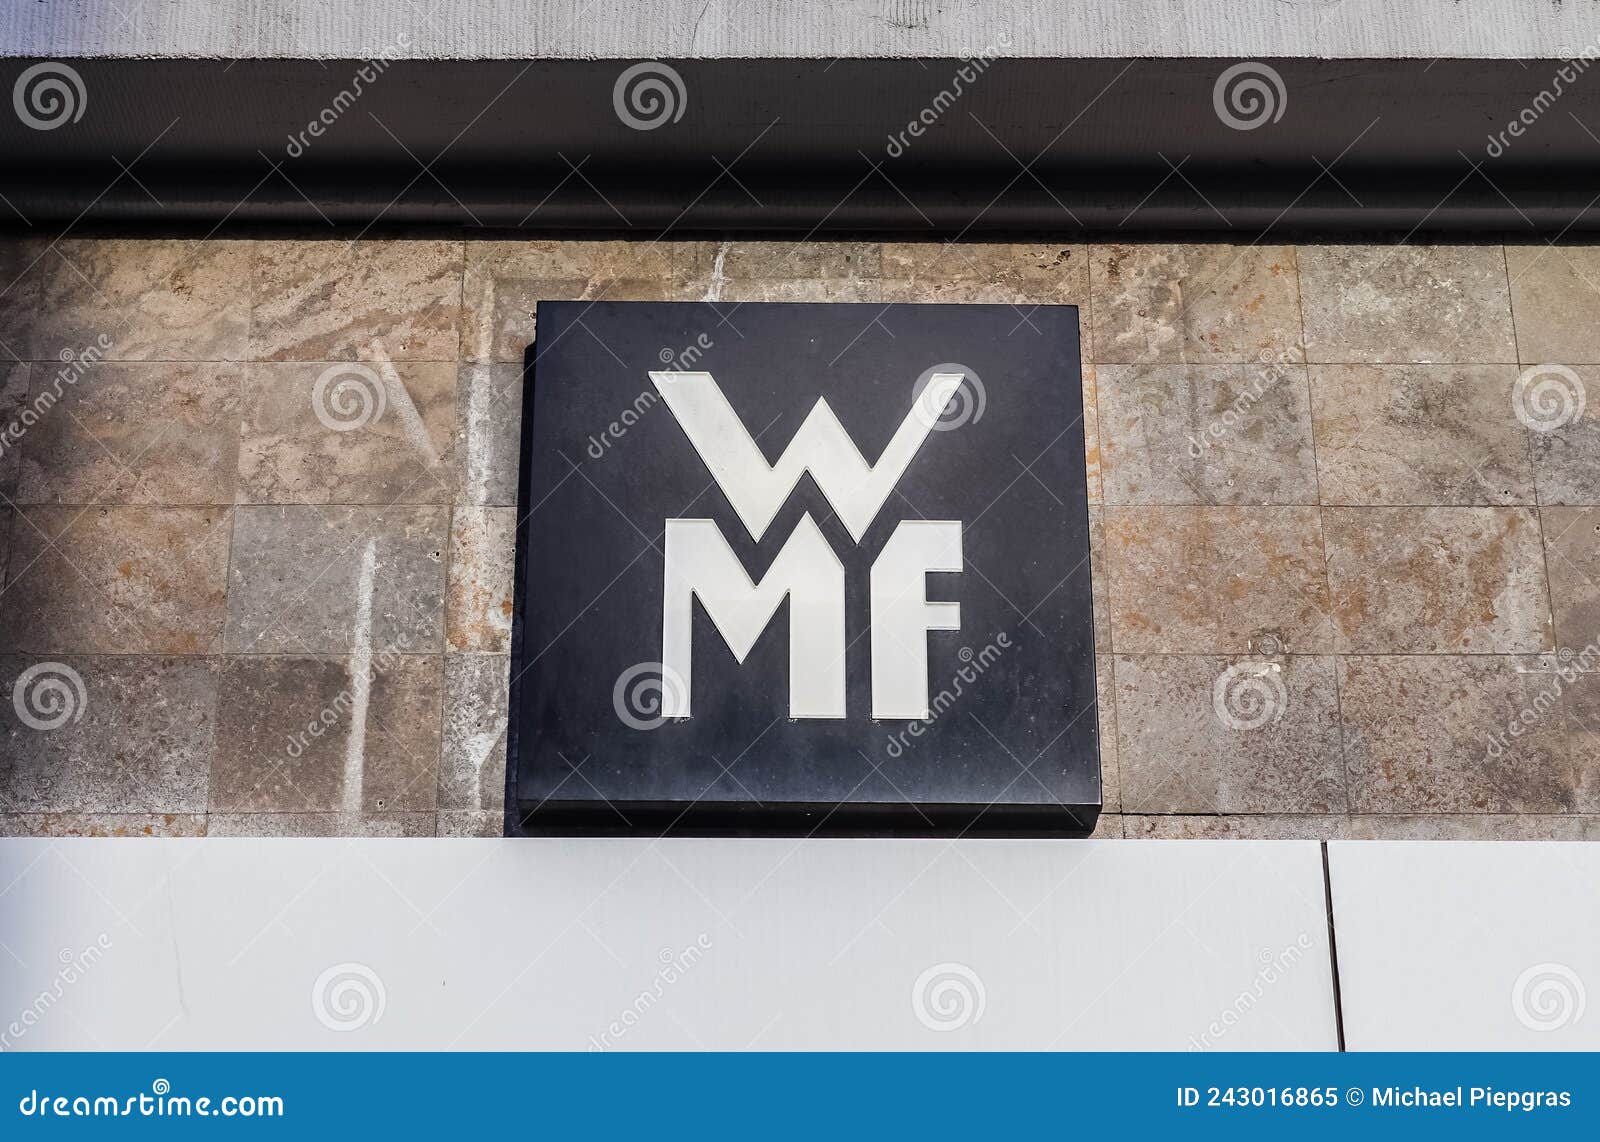 Wmf Logo Photos - Free & Royalty-Free Stock Photos from Dreamstime